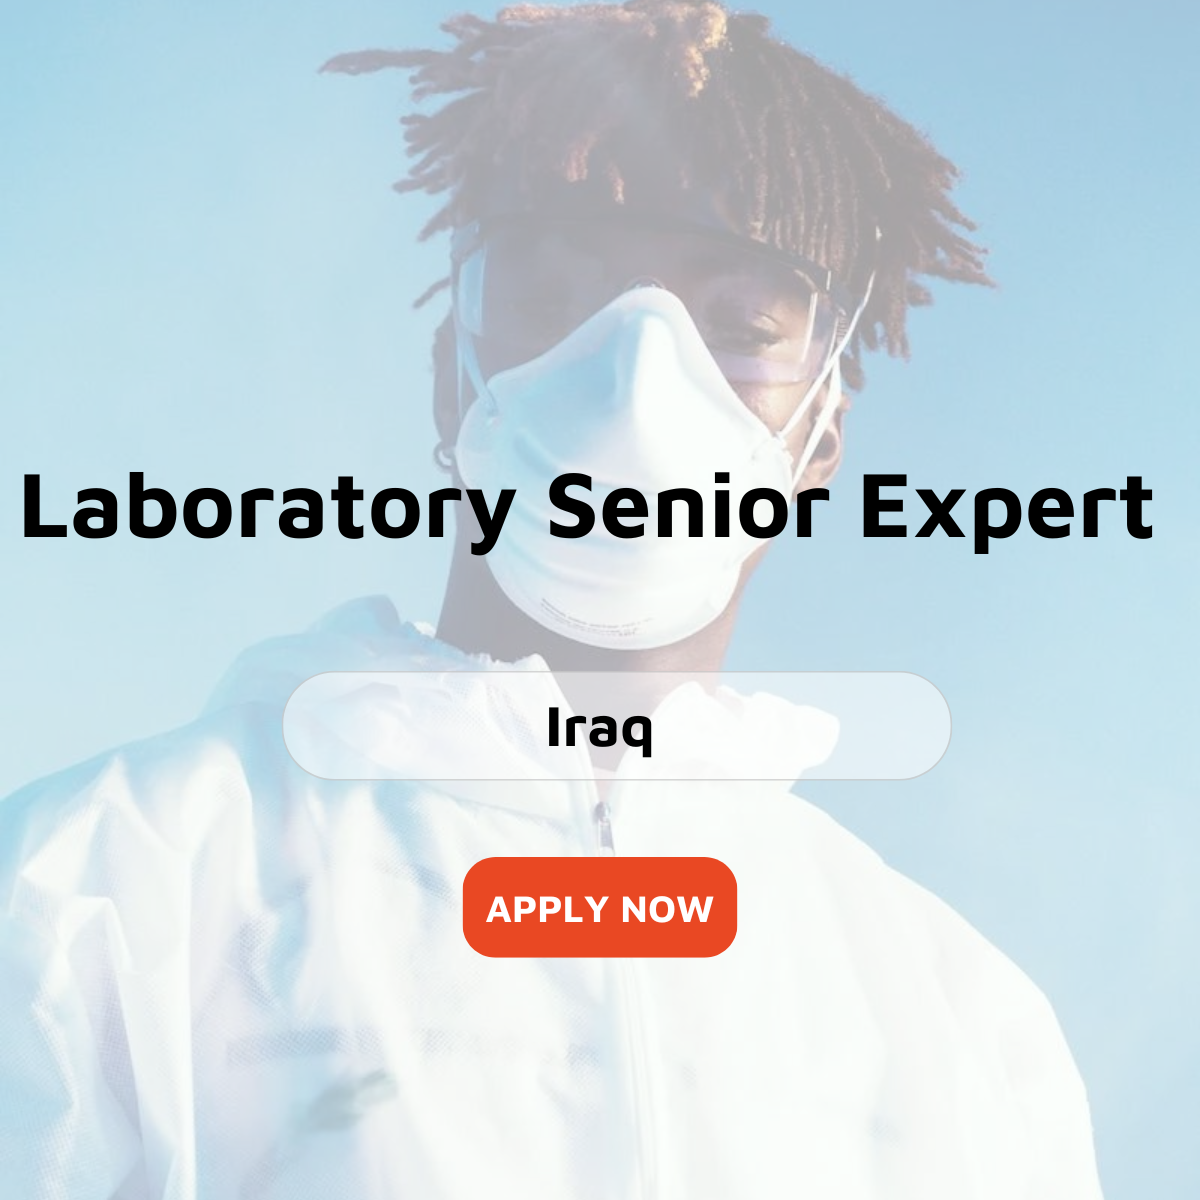 Laboratory Senior Expert